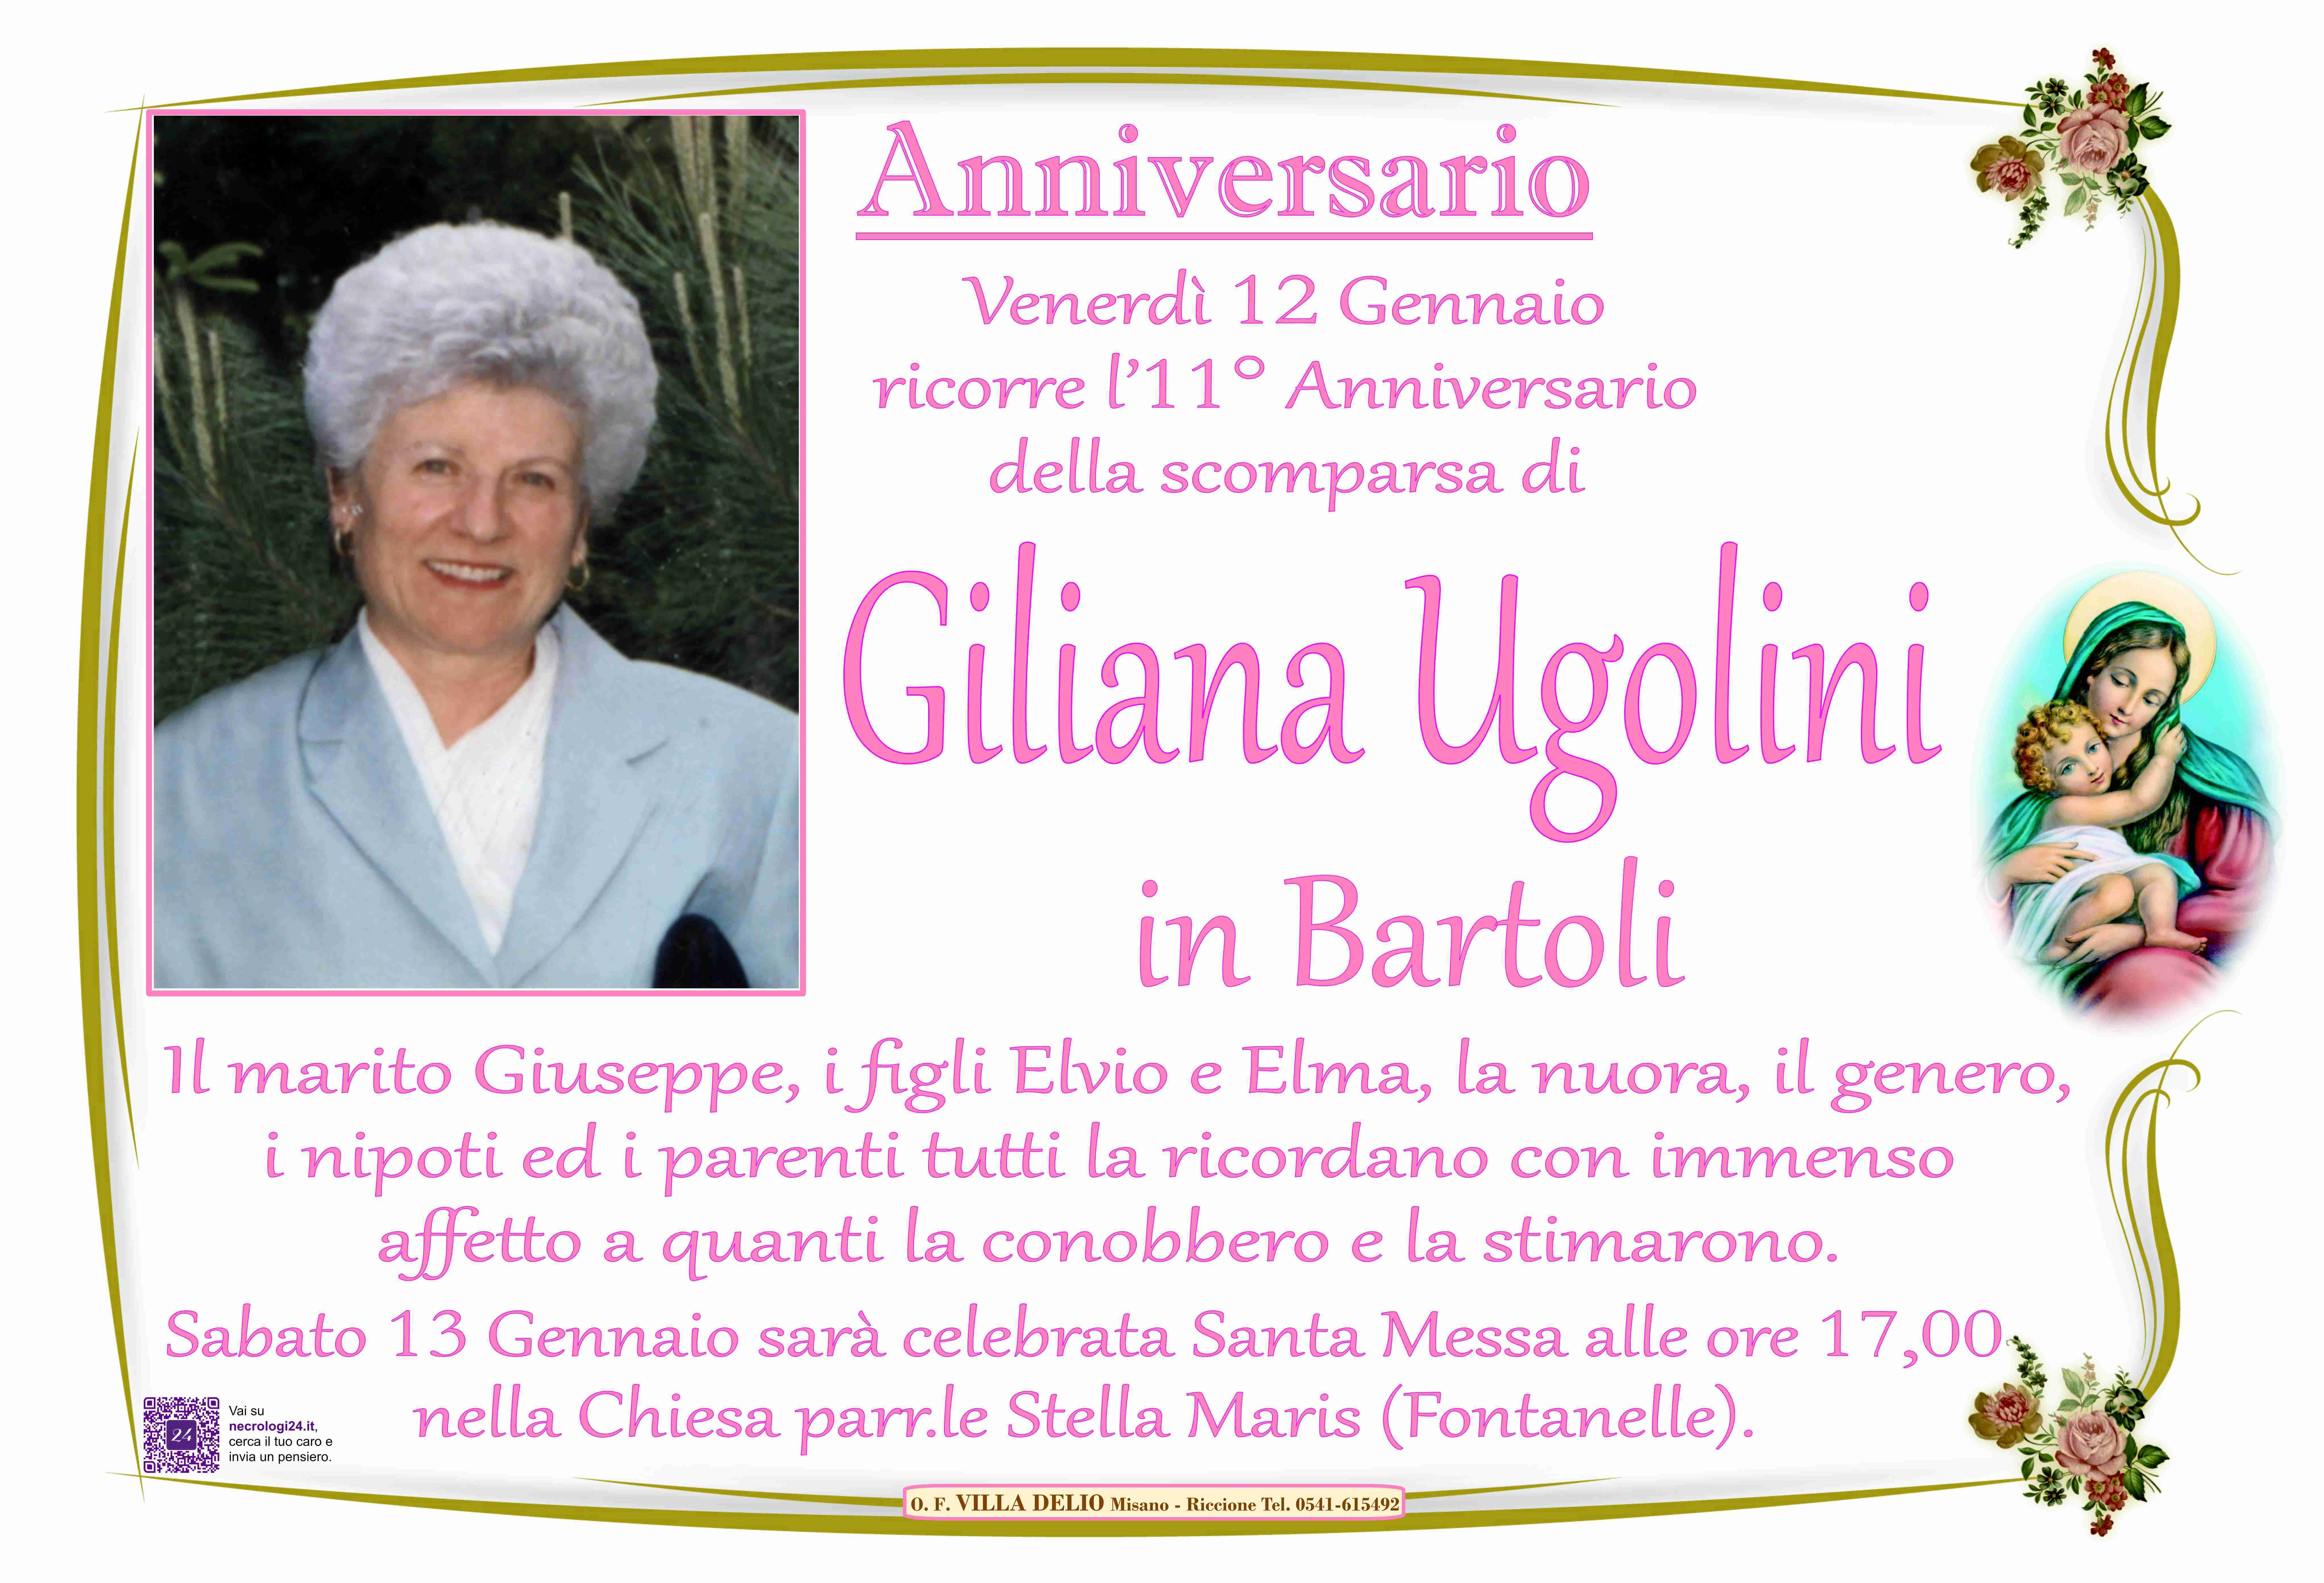 Giuliana Ugolini in Bartoli